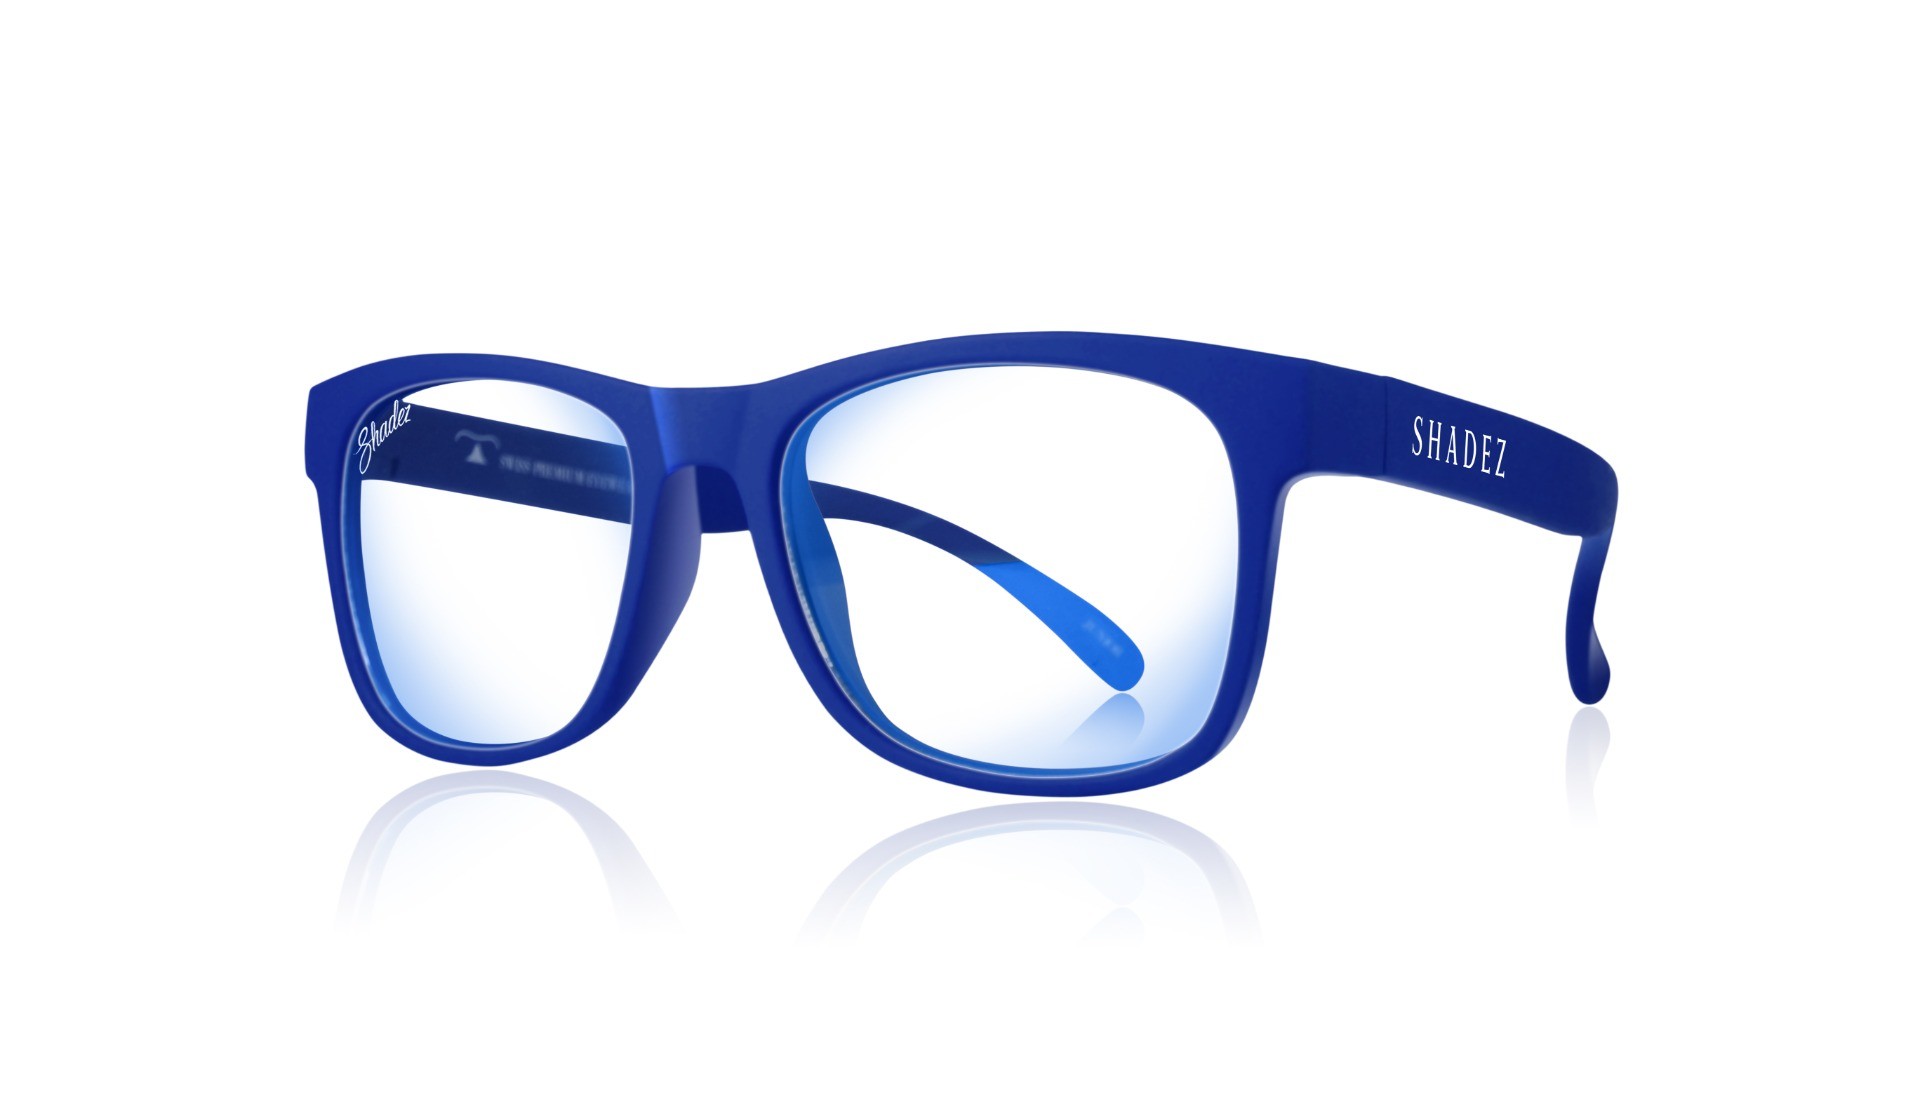 Shadez - Blue light protection glasses for kids - Blue Ray - Blue